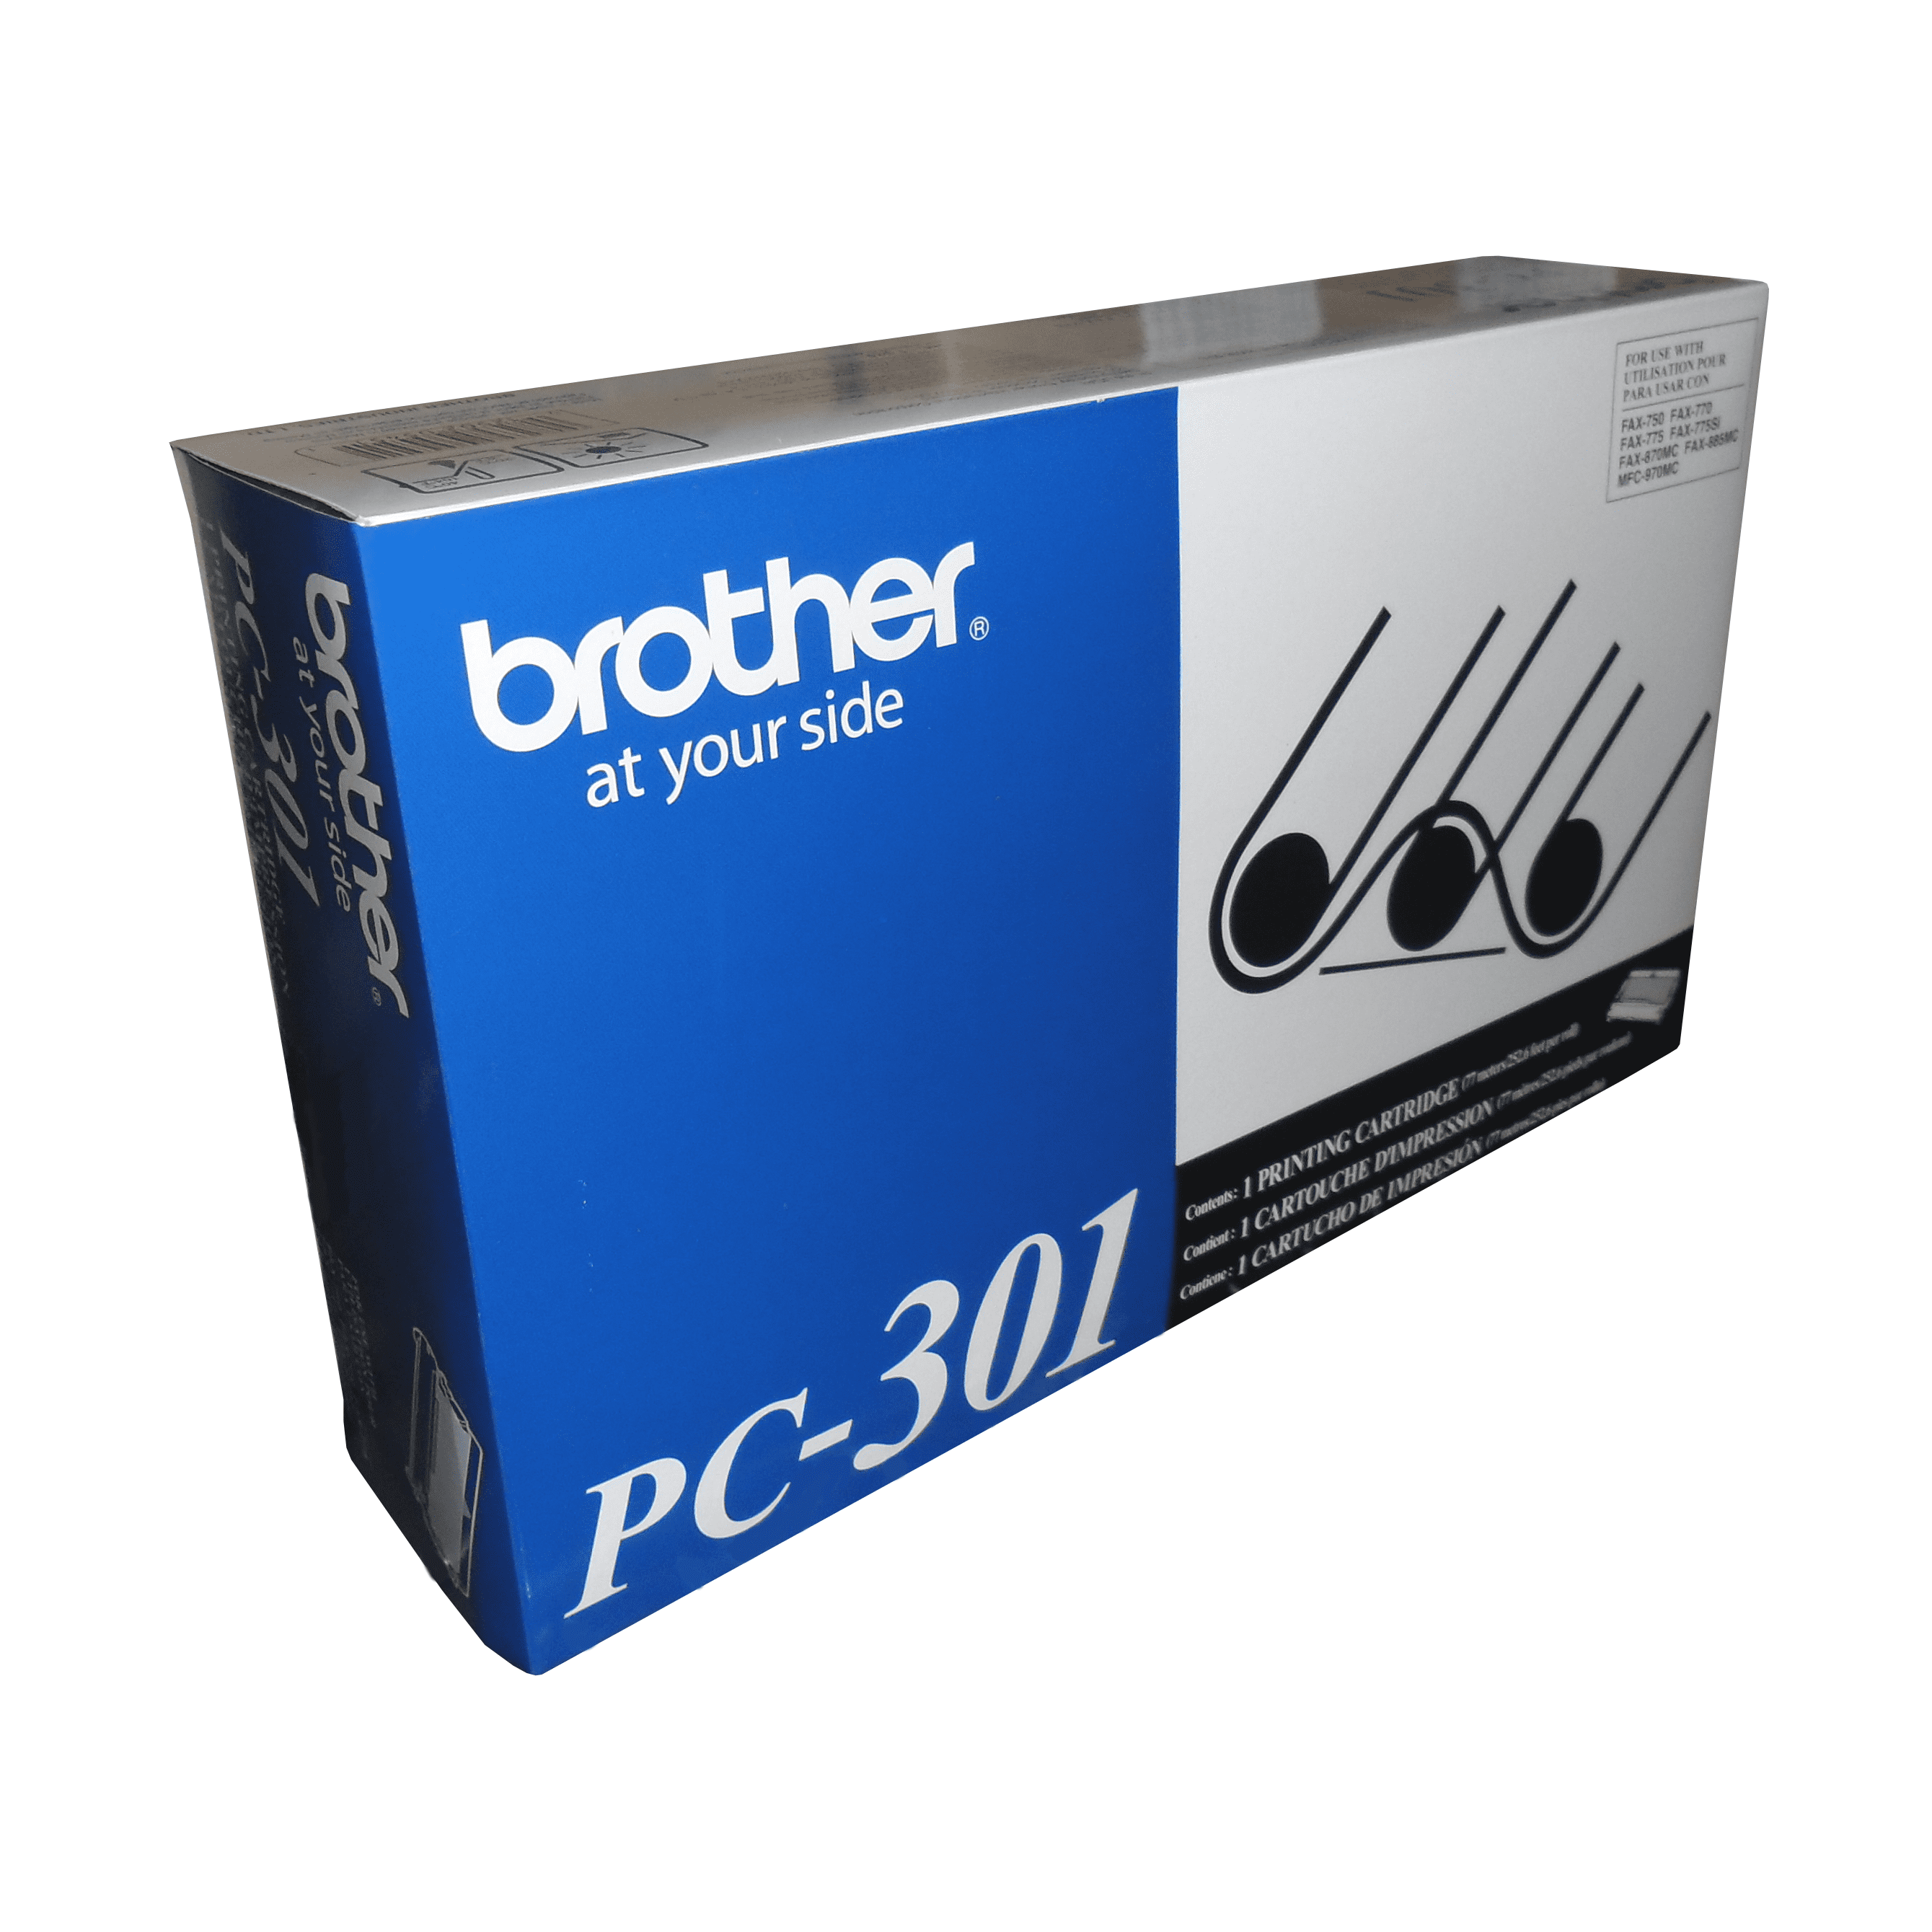 Brother PC301 Print cartridge - toners.ca